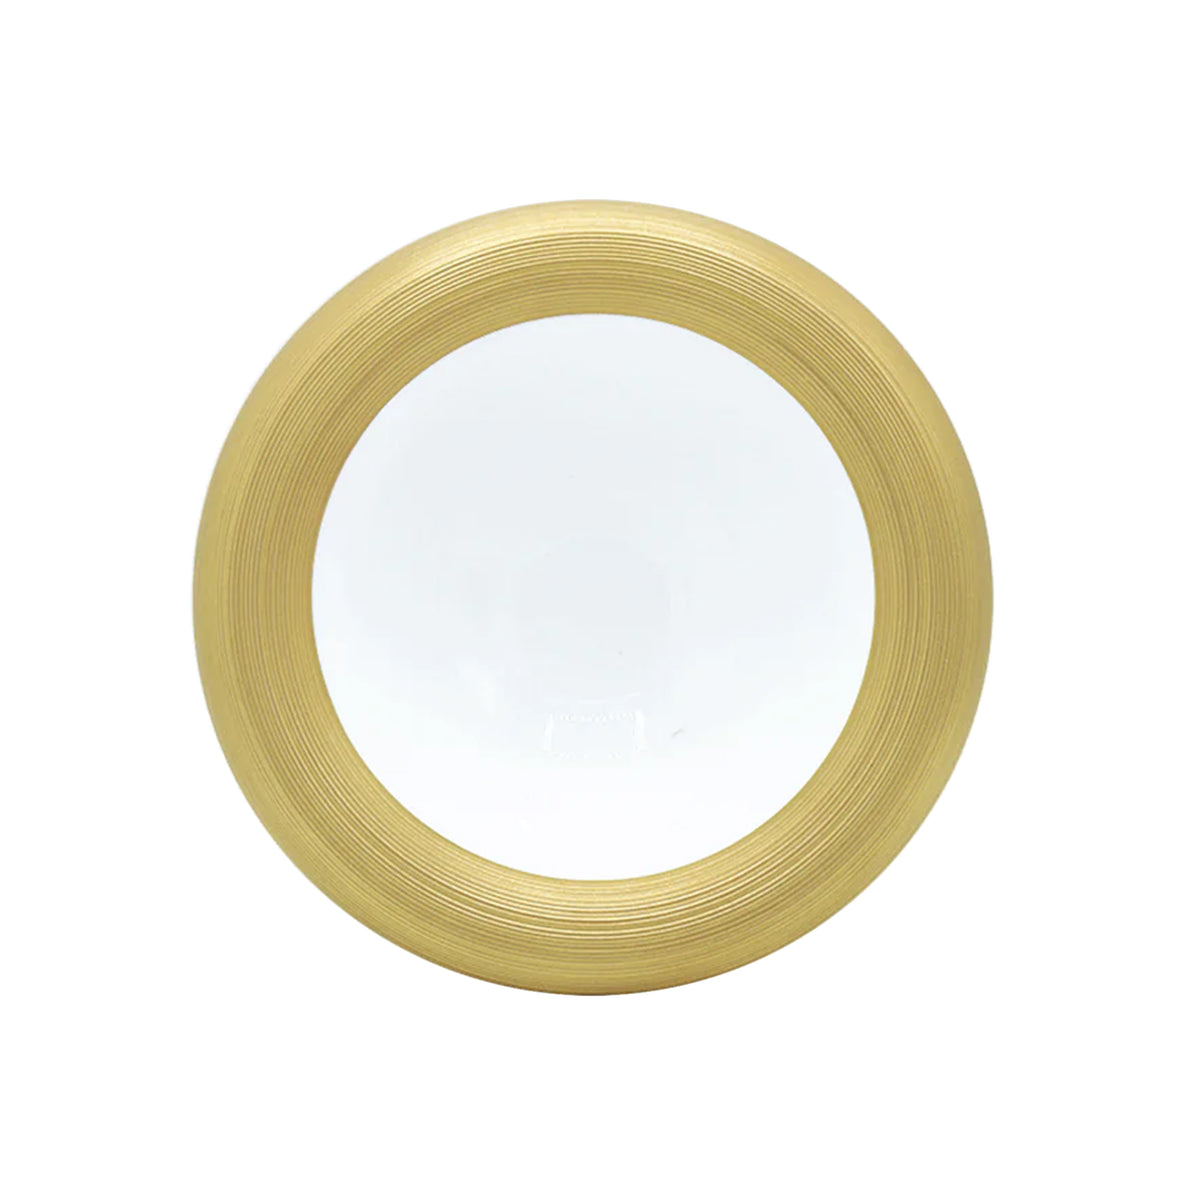 HEMISPHERE Gold - Bubble 11 cm